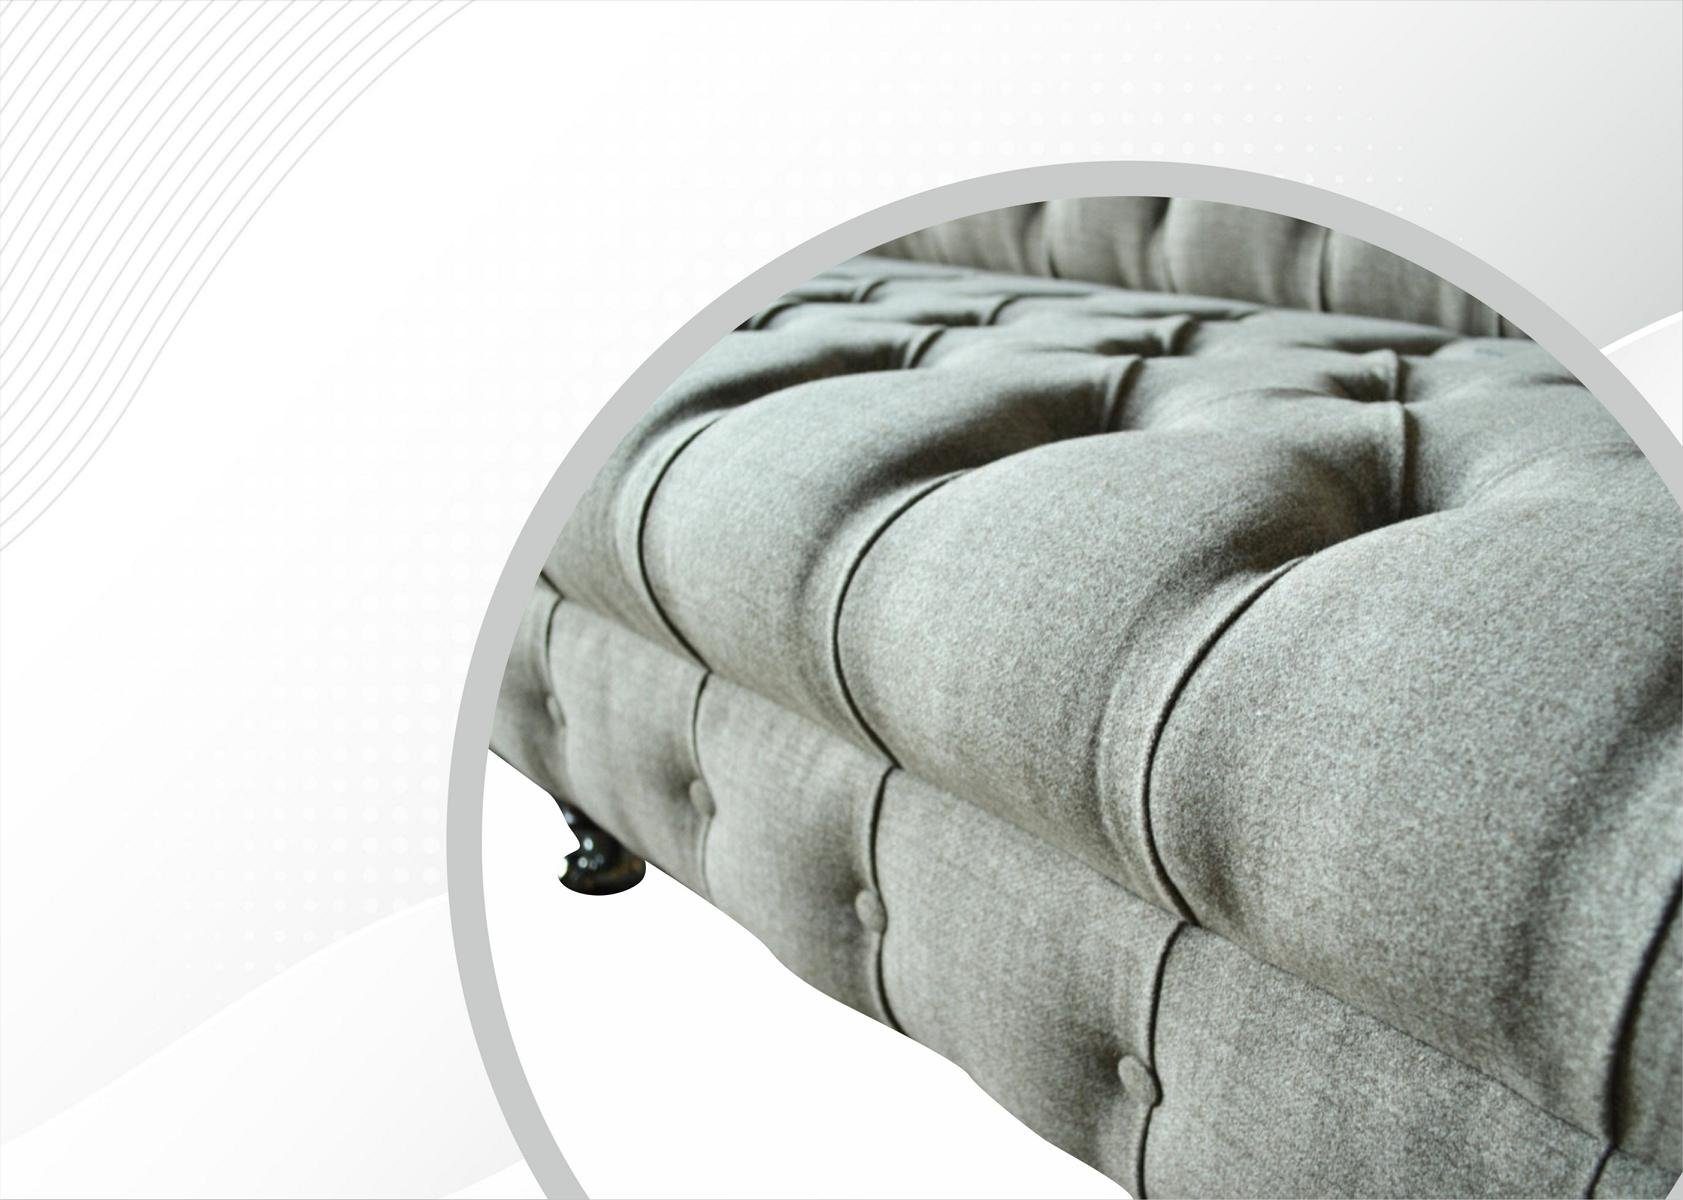 cm Couch Sofa Sofa Design 4 Chesterfield Sitzer Chesterfield-Sofa, JVmoebel 265